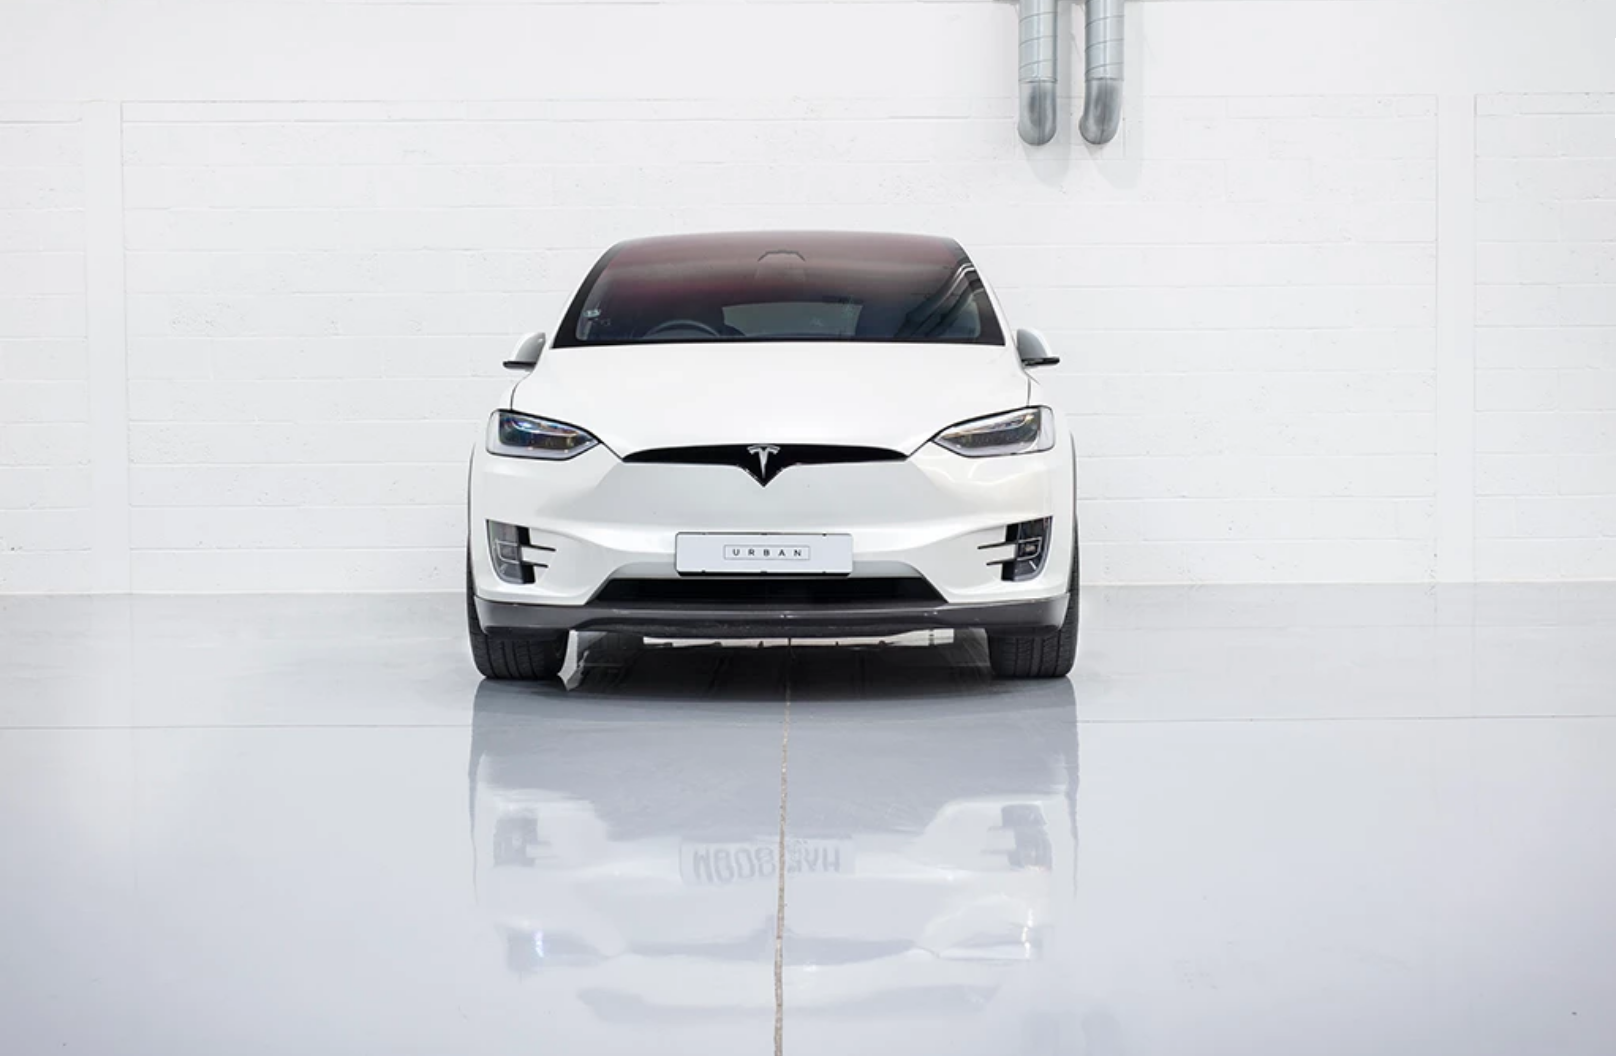 Urban  body kit for Tesla Model X latest model